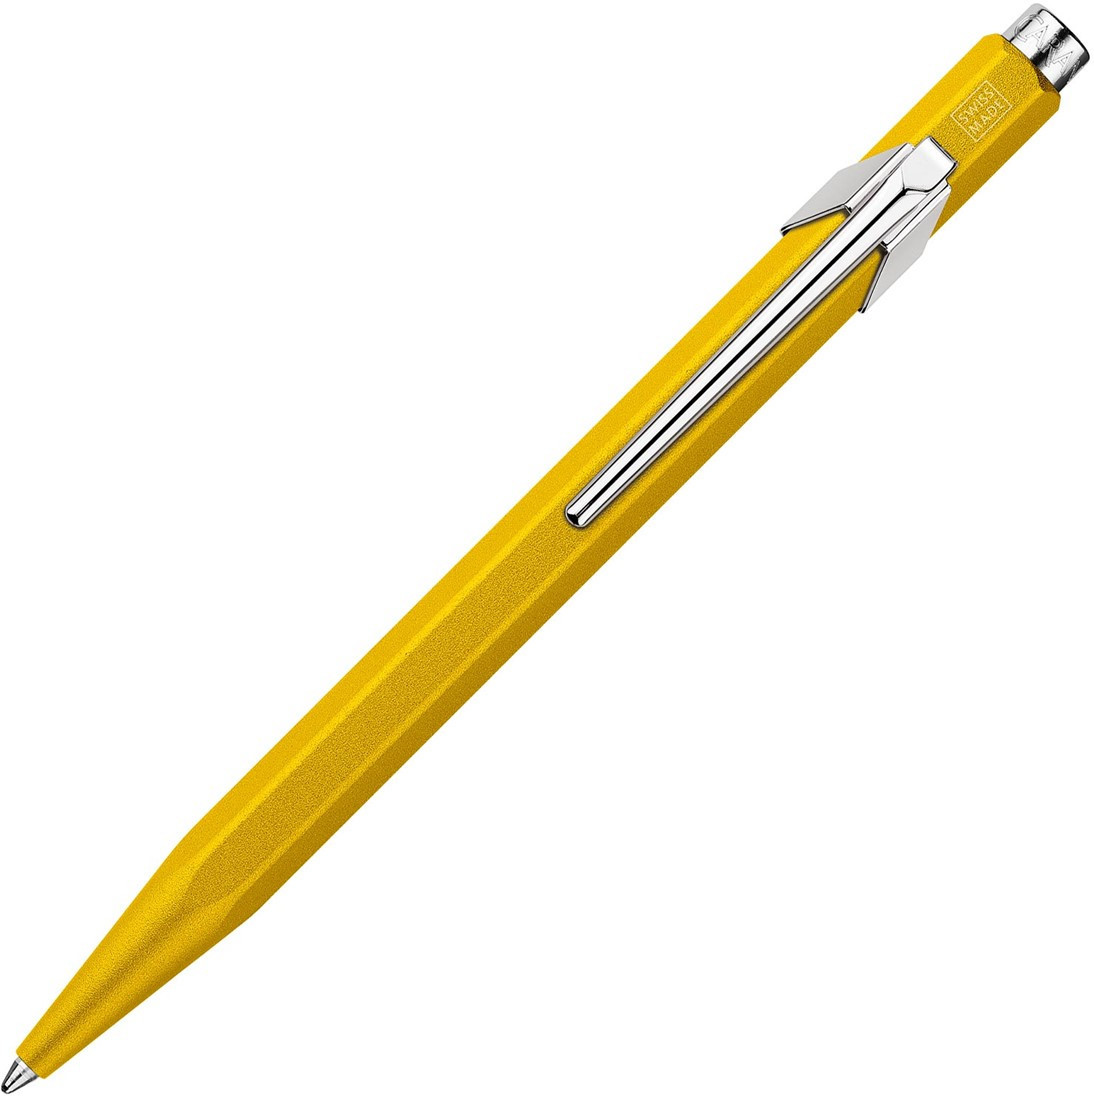 Caran Dache 849 metallic yellow ballpoint pen, with slim metal box